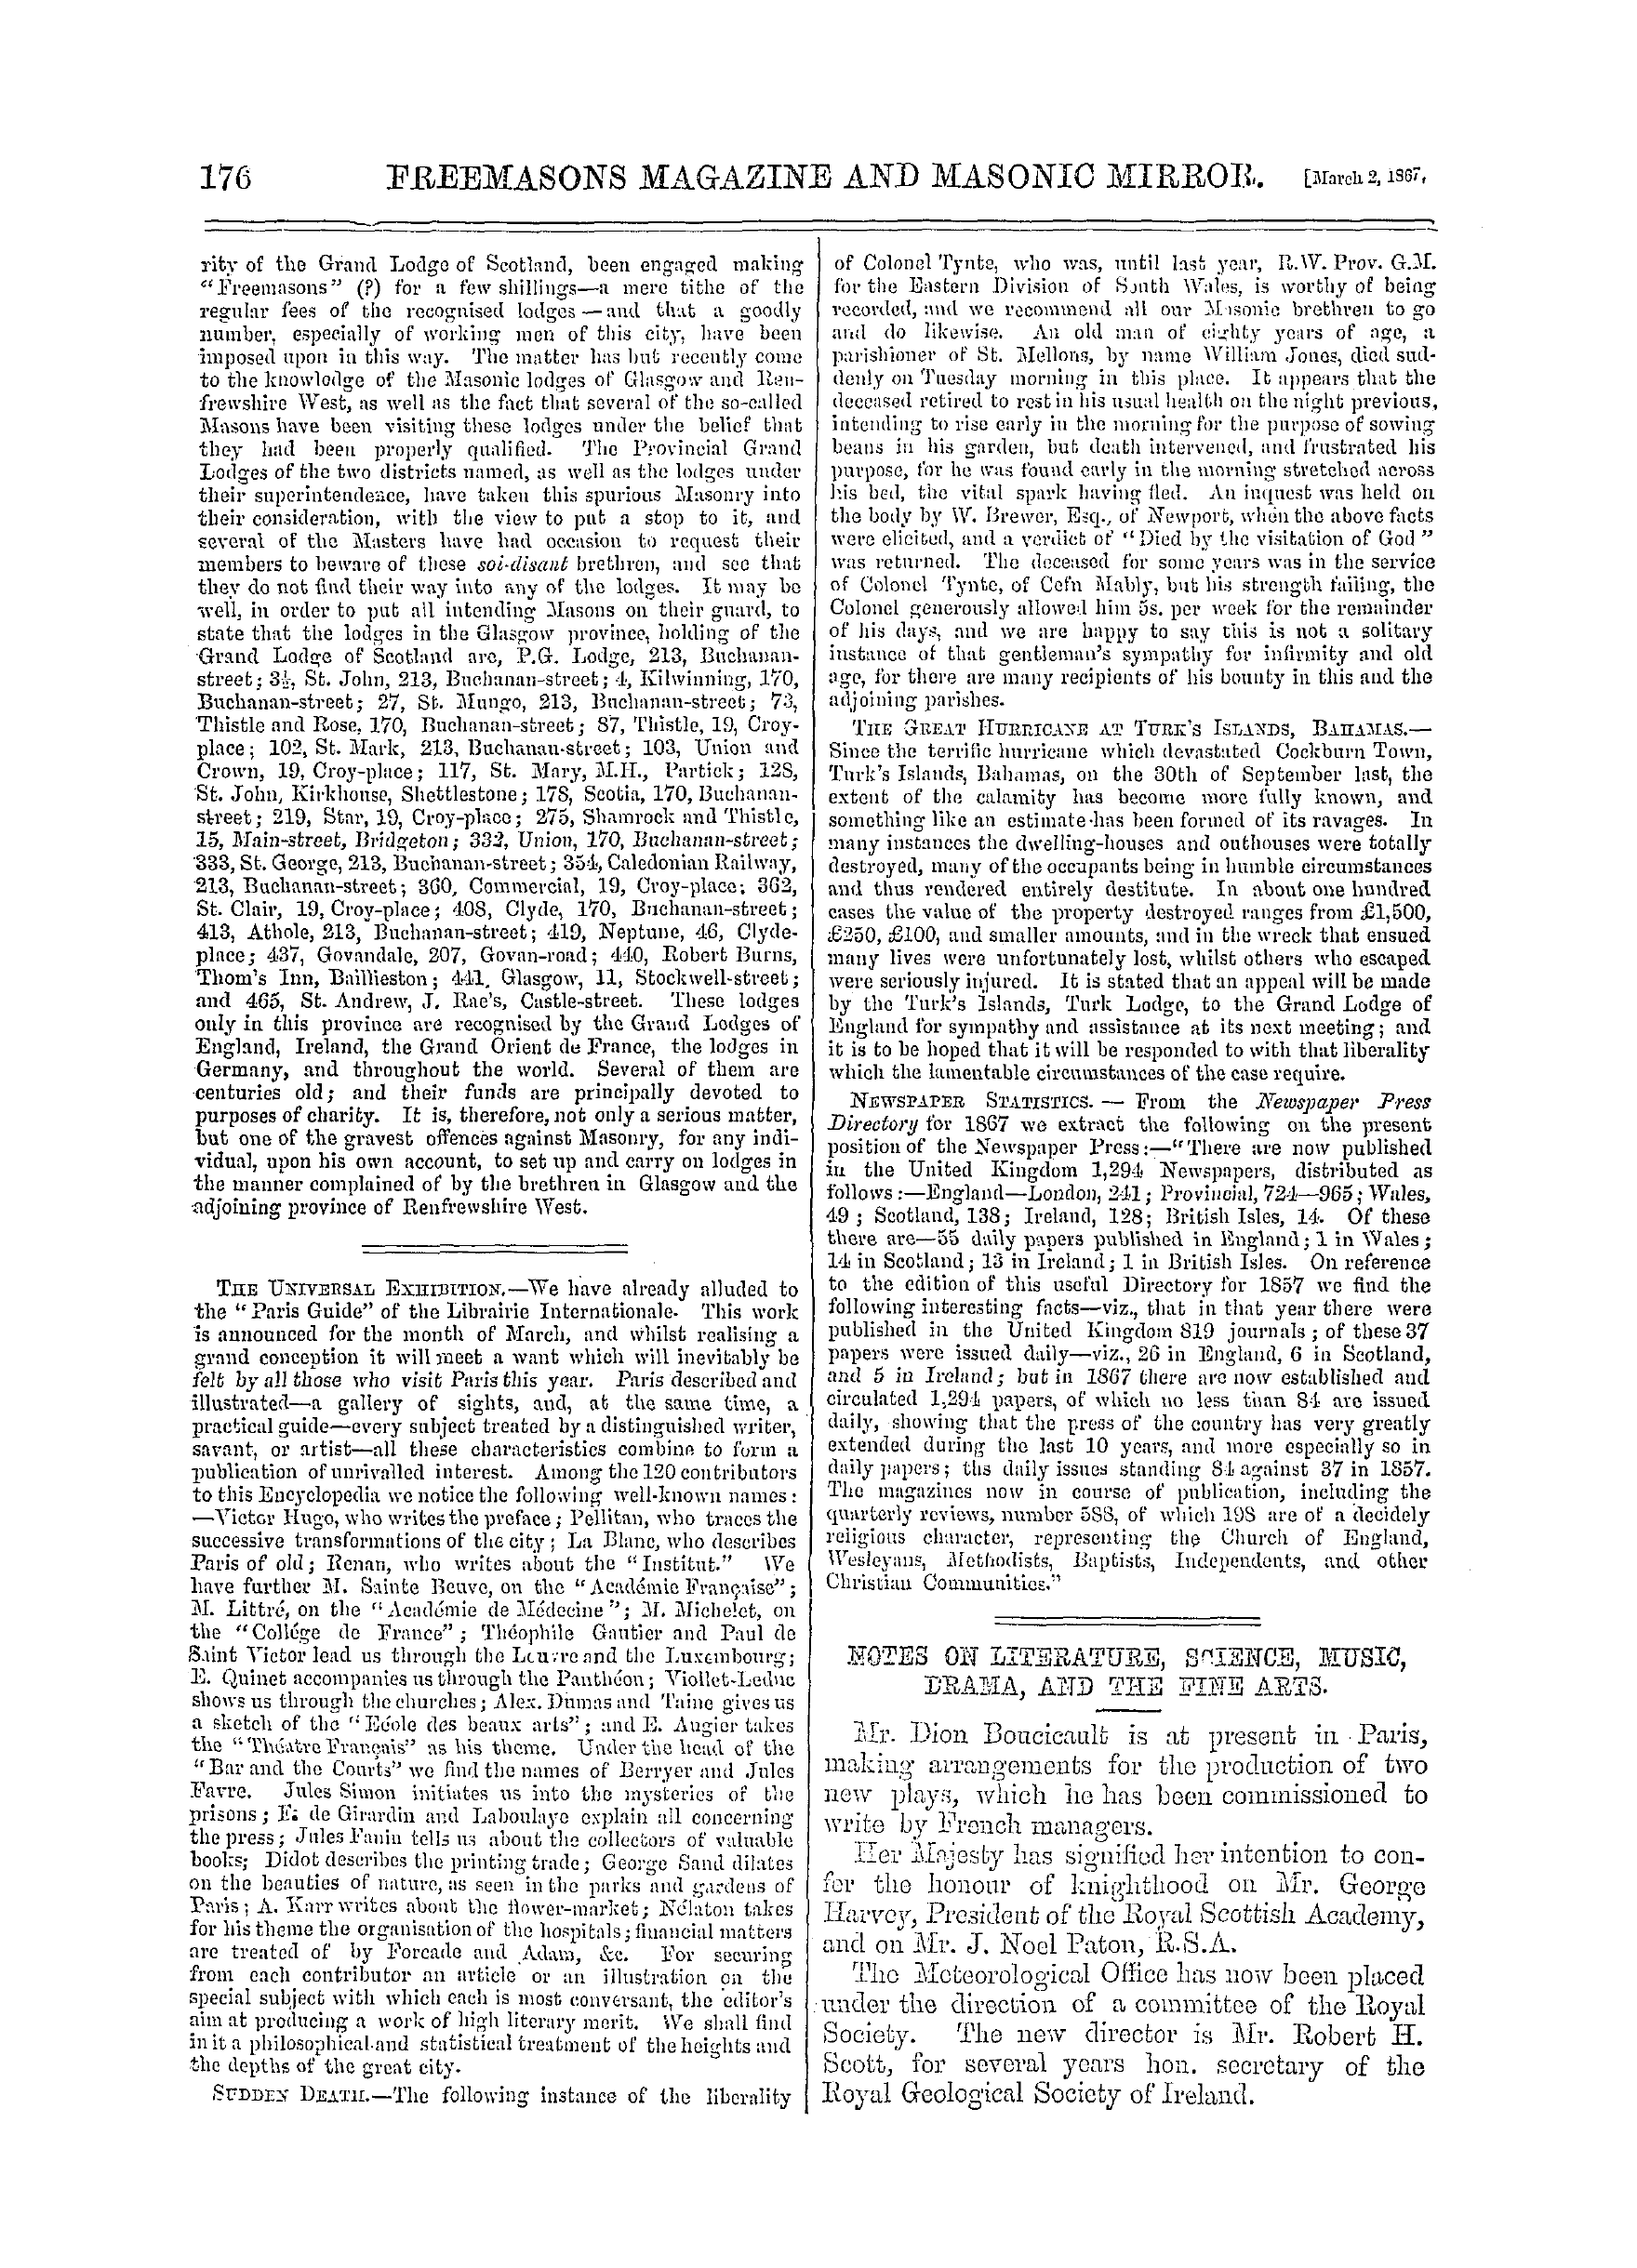 The Freemasons' Monthly Magazine: 1867-03-02 - Spurious Masonry.